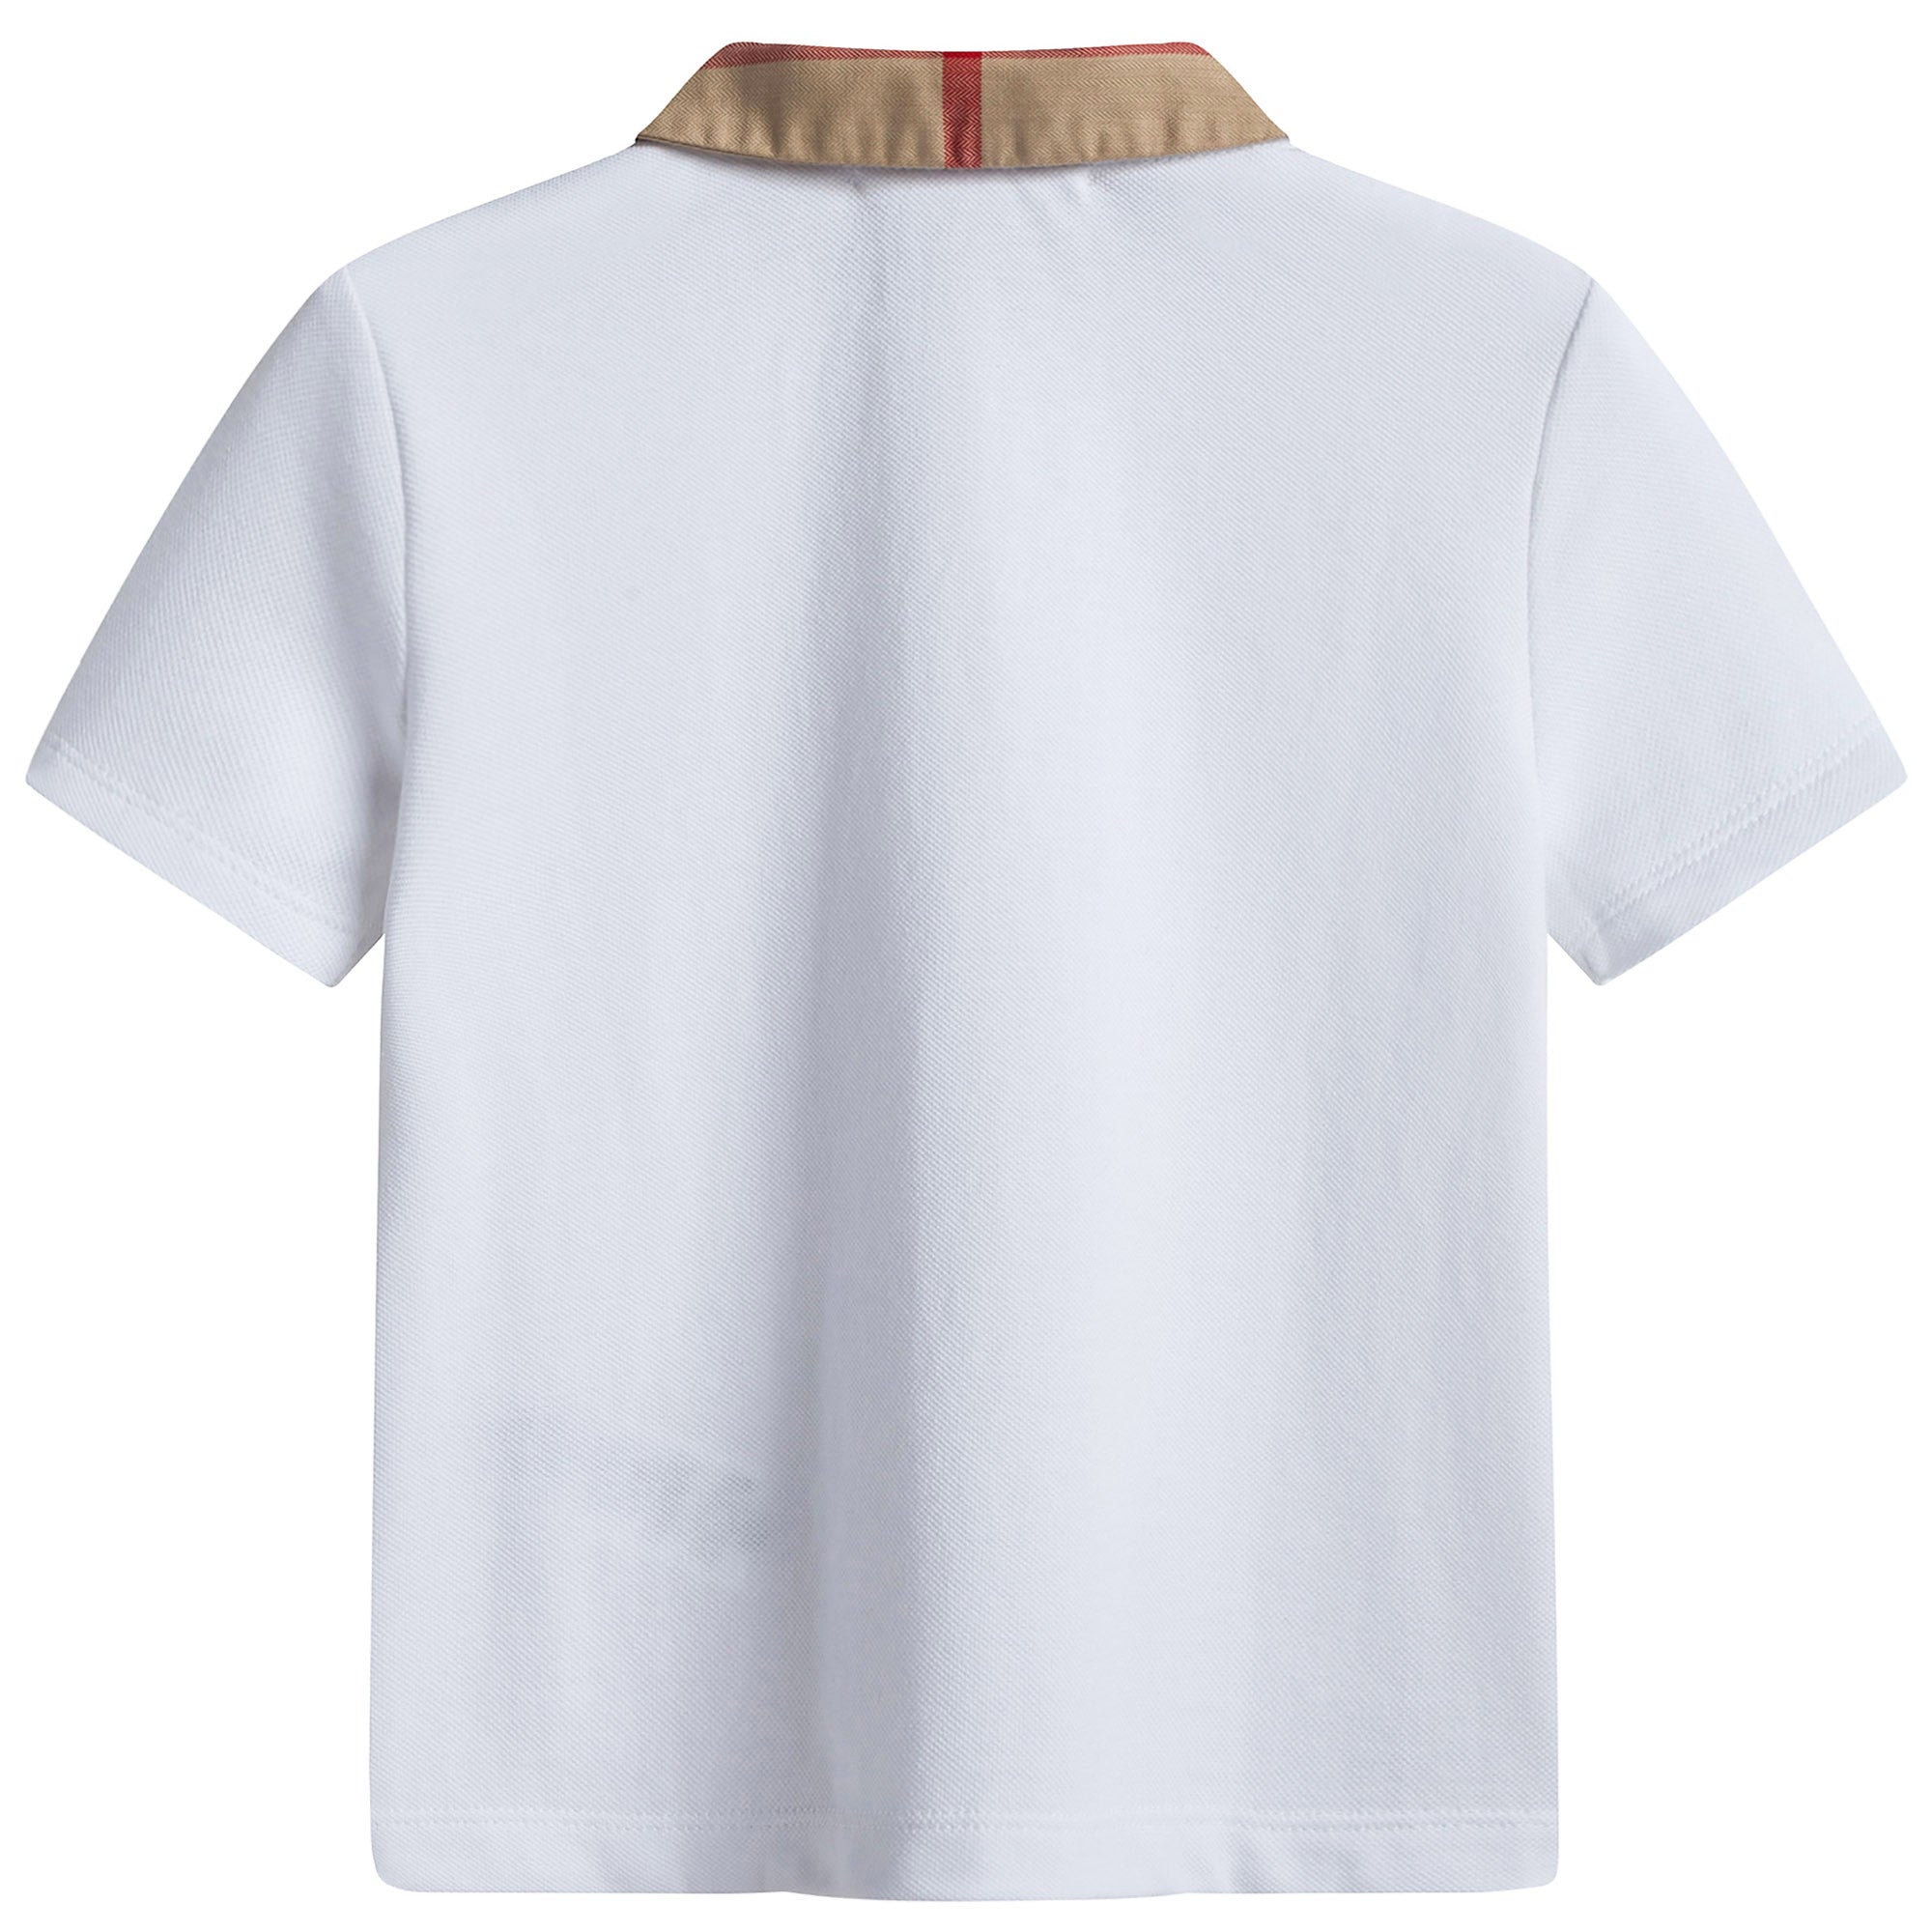 Girls White Cotton Polo Shirt